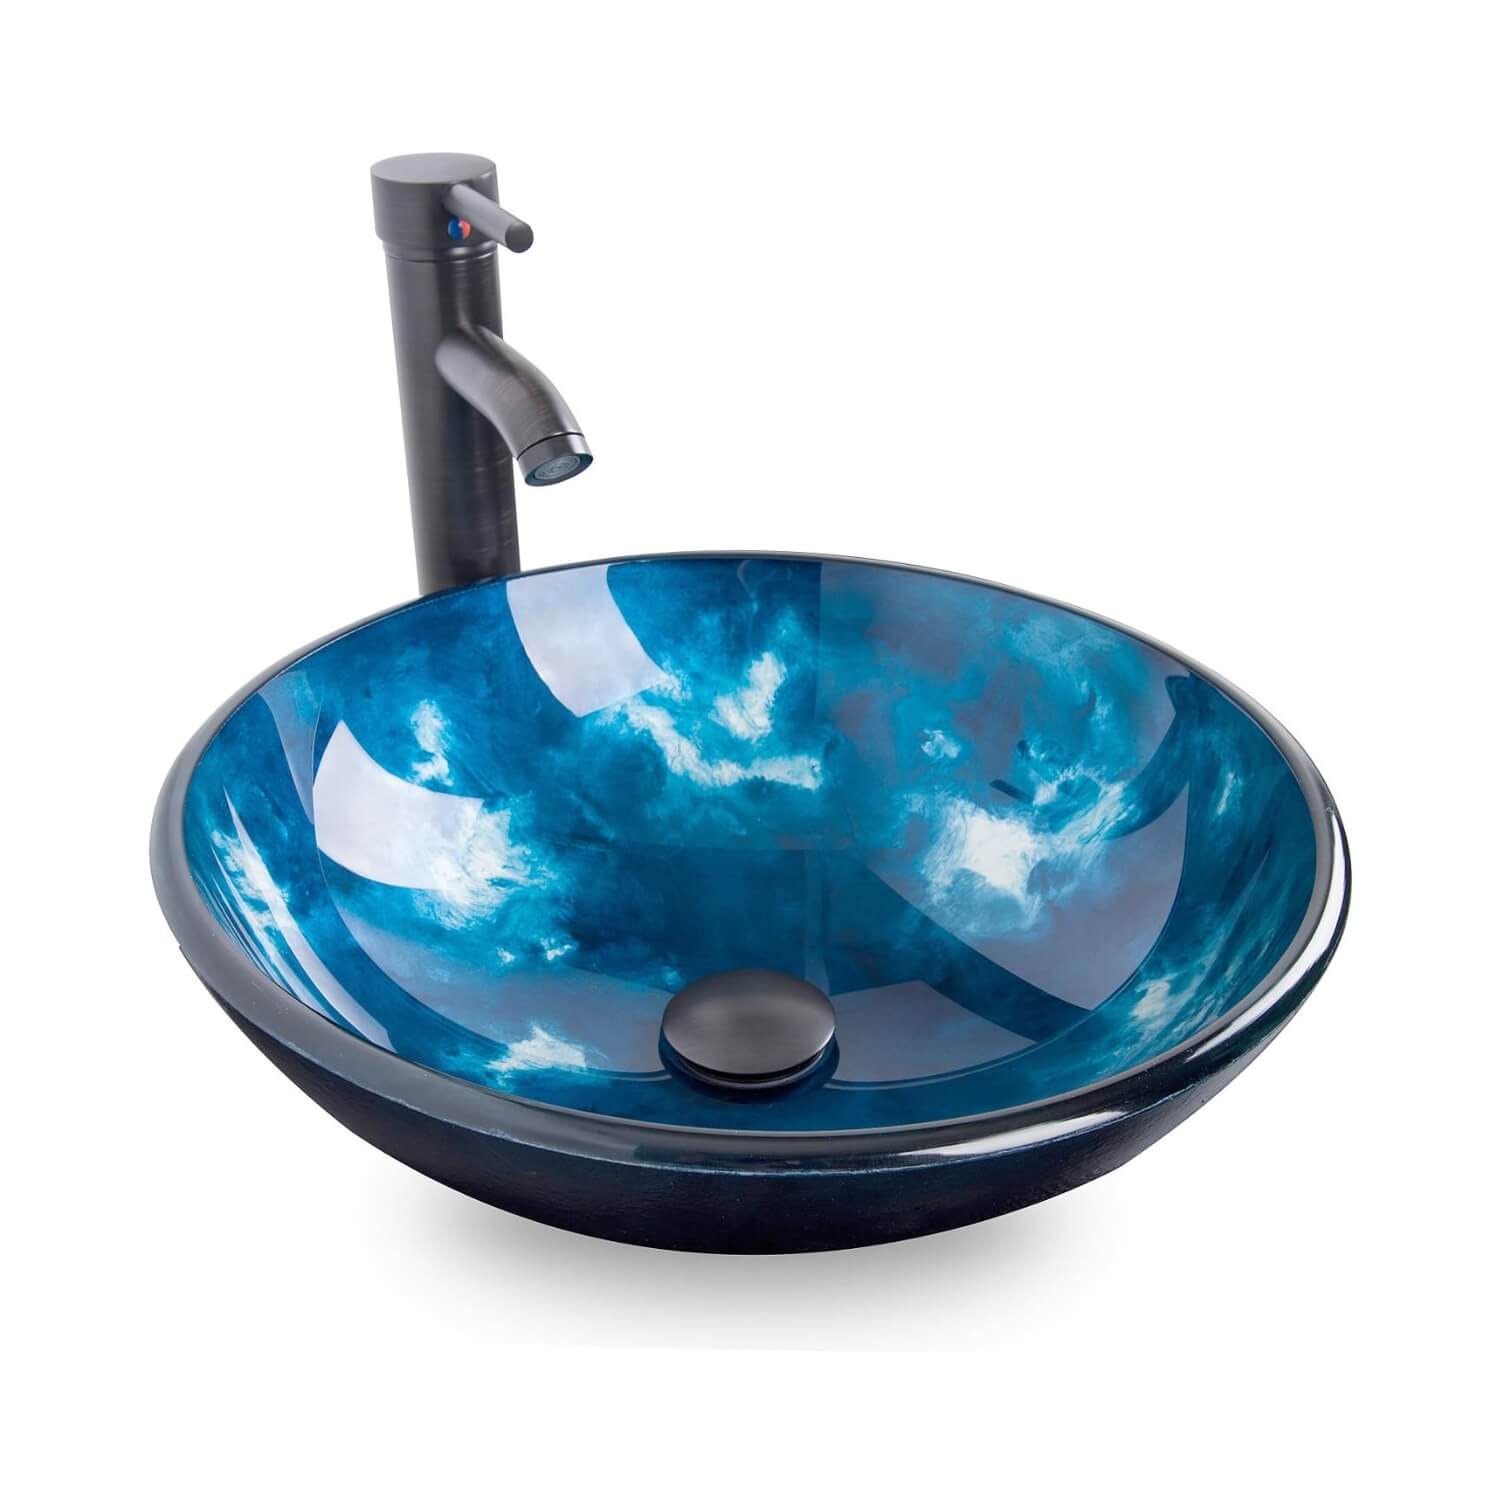 Elecwish blue glass sink